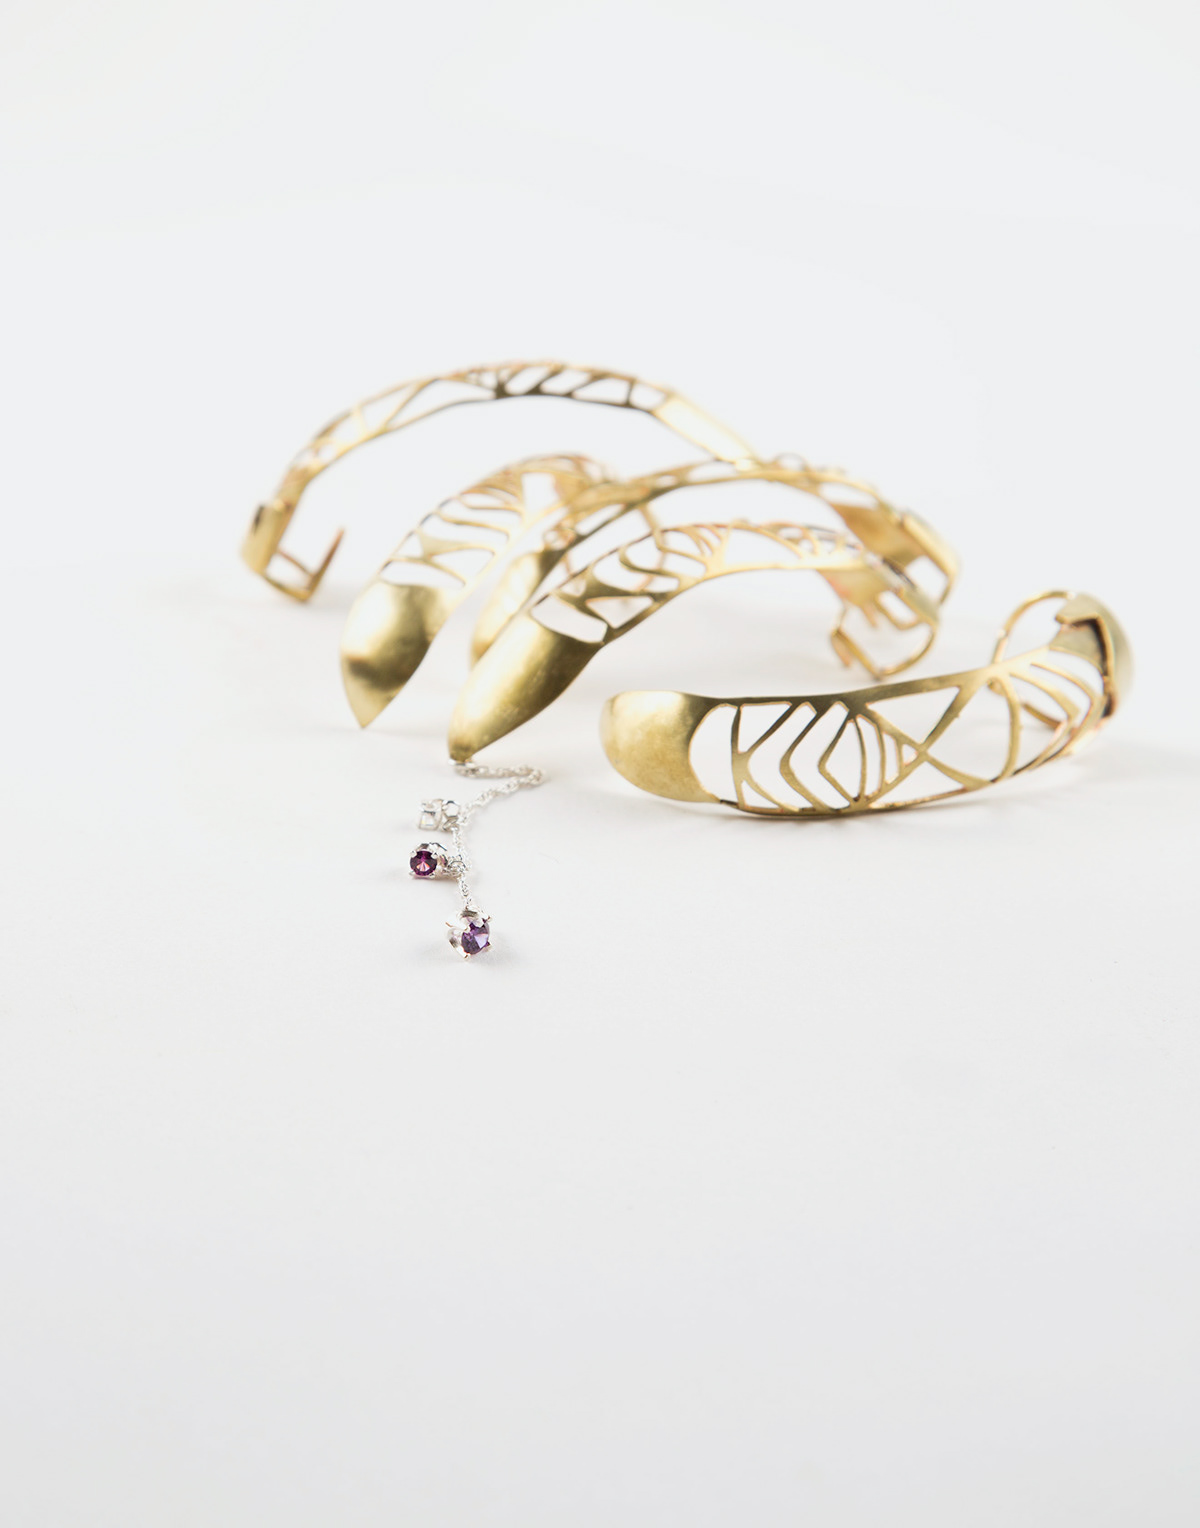 exaggerated beauty fabrication jewelry art jewelry product metal